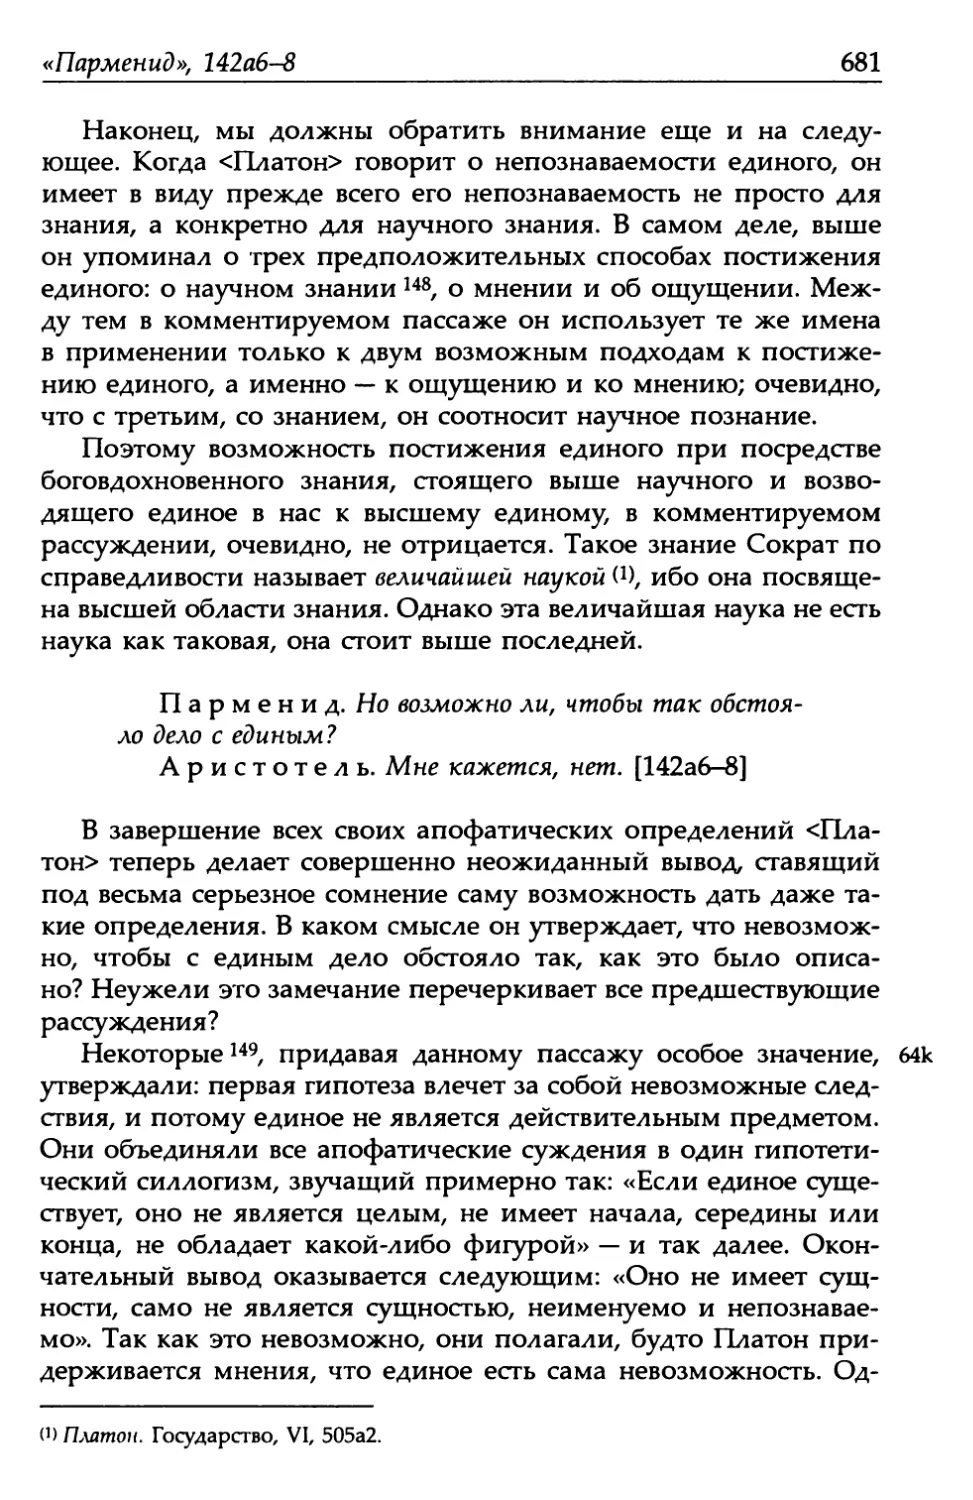 «Парменид», 142а6-8